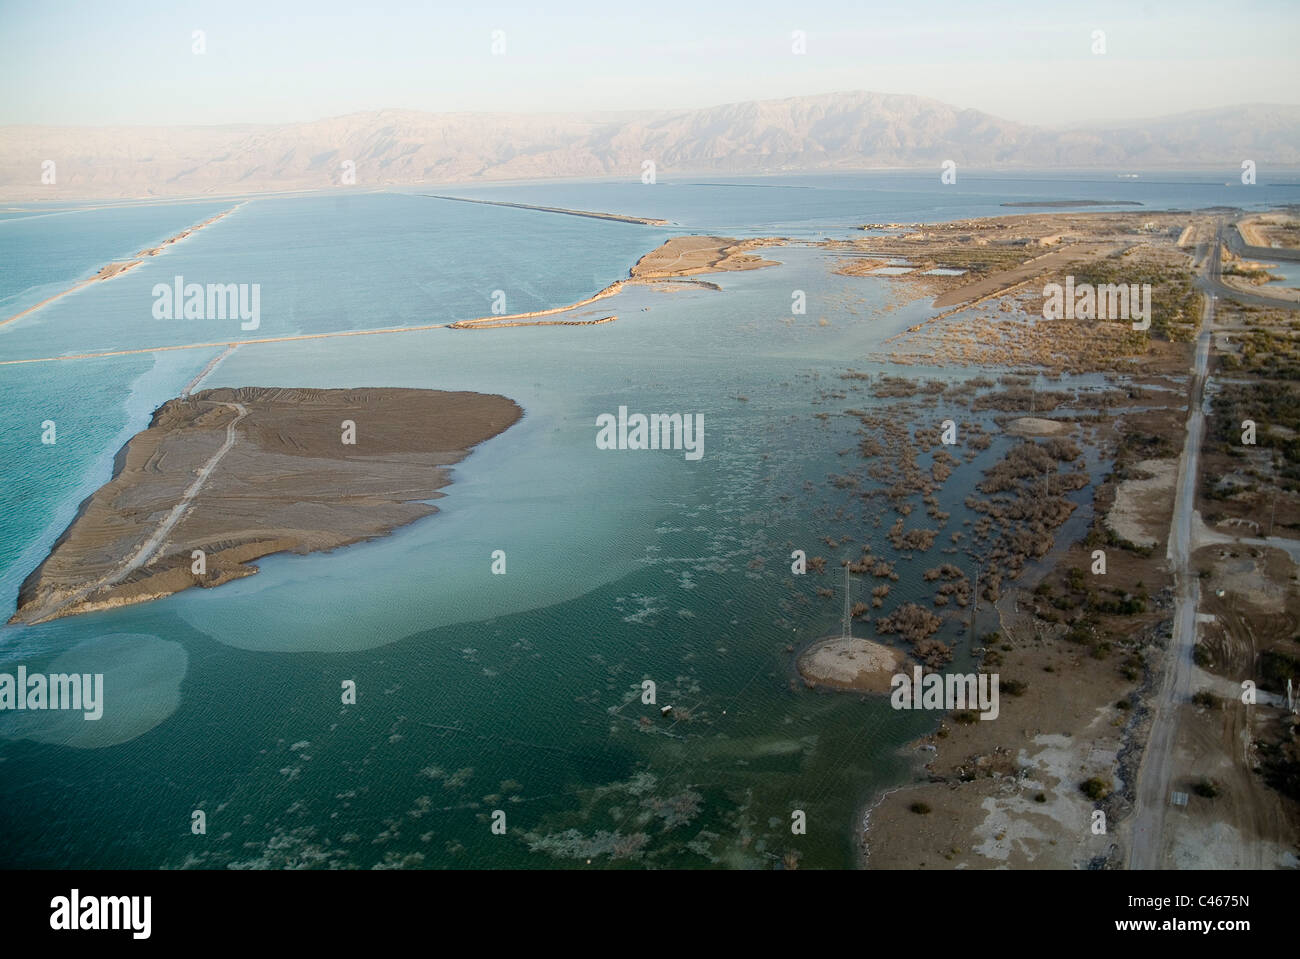 Fotografia aerea del bacino meridionale del Mar Morto Foto Stock